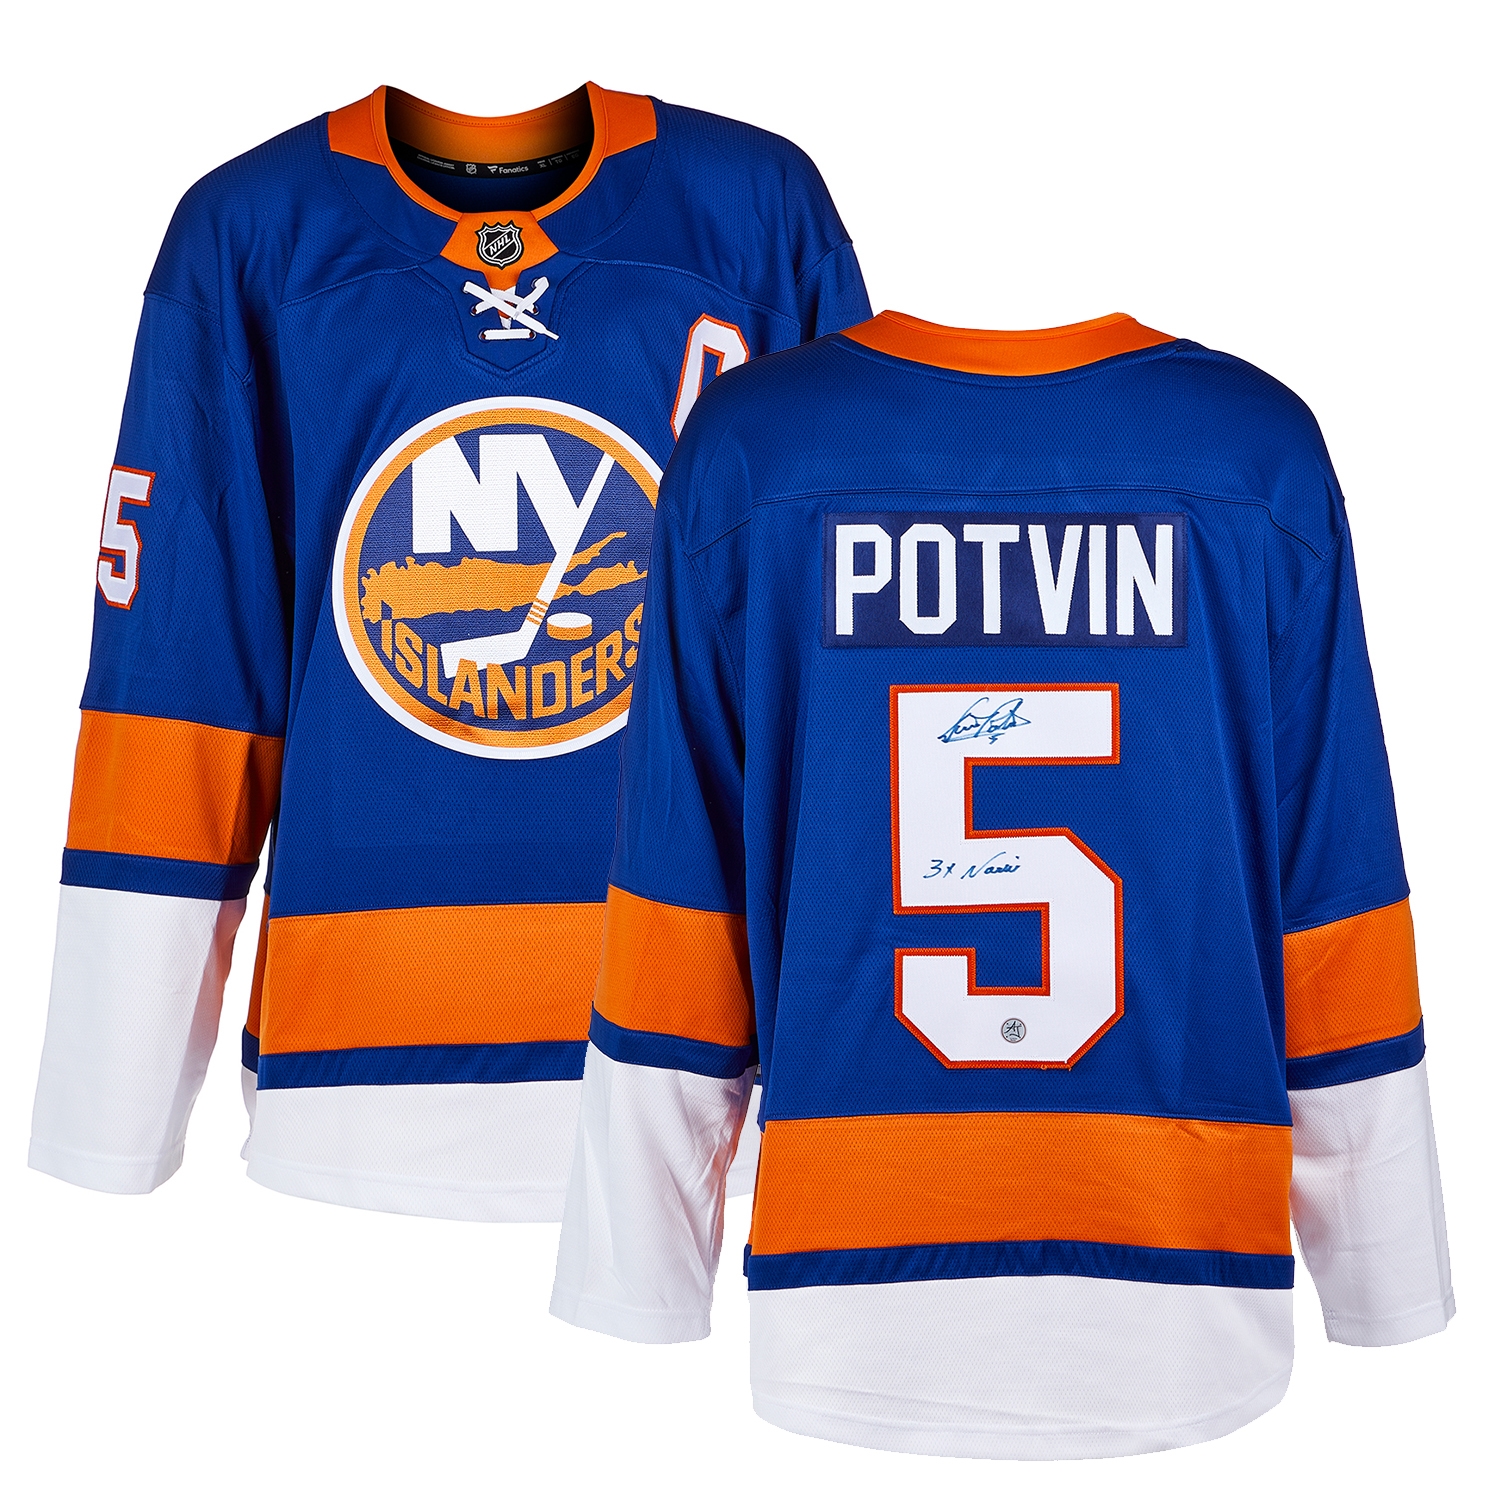 Denis Potvin New York Islanders Signed Norris Fanatics Jersey